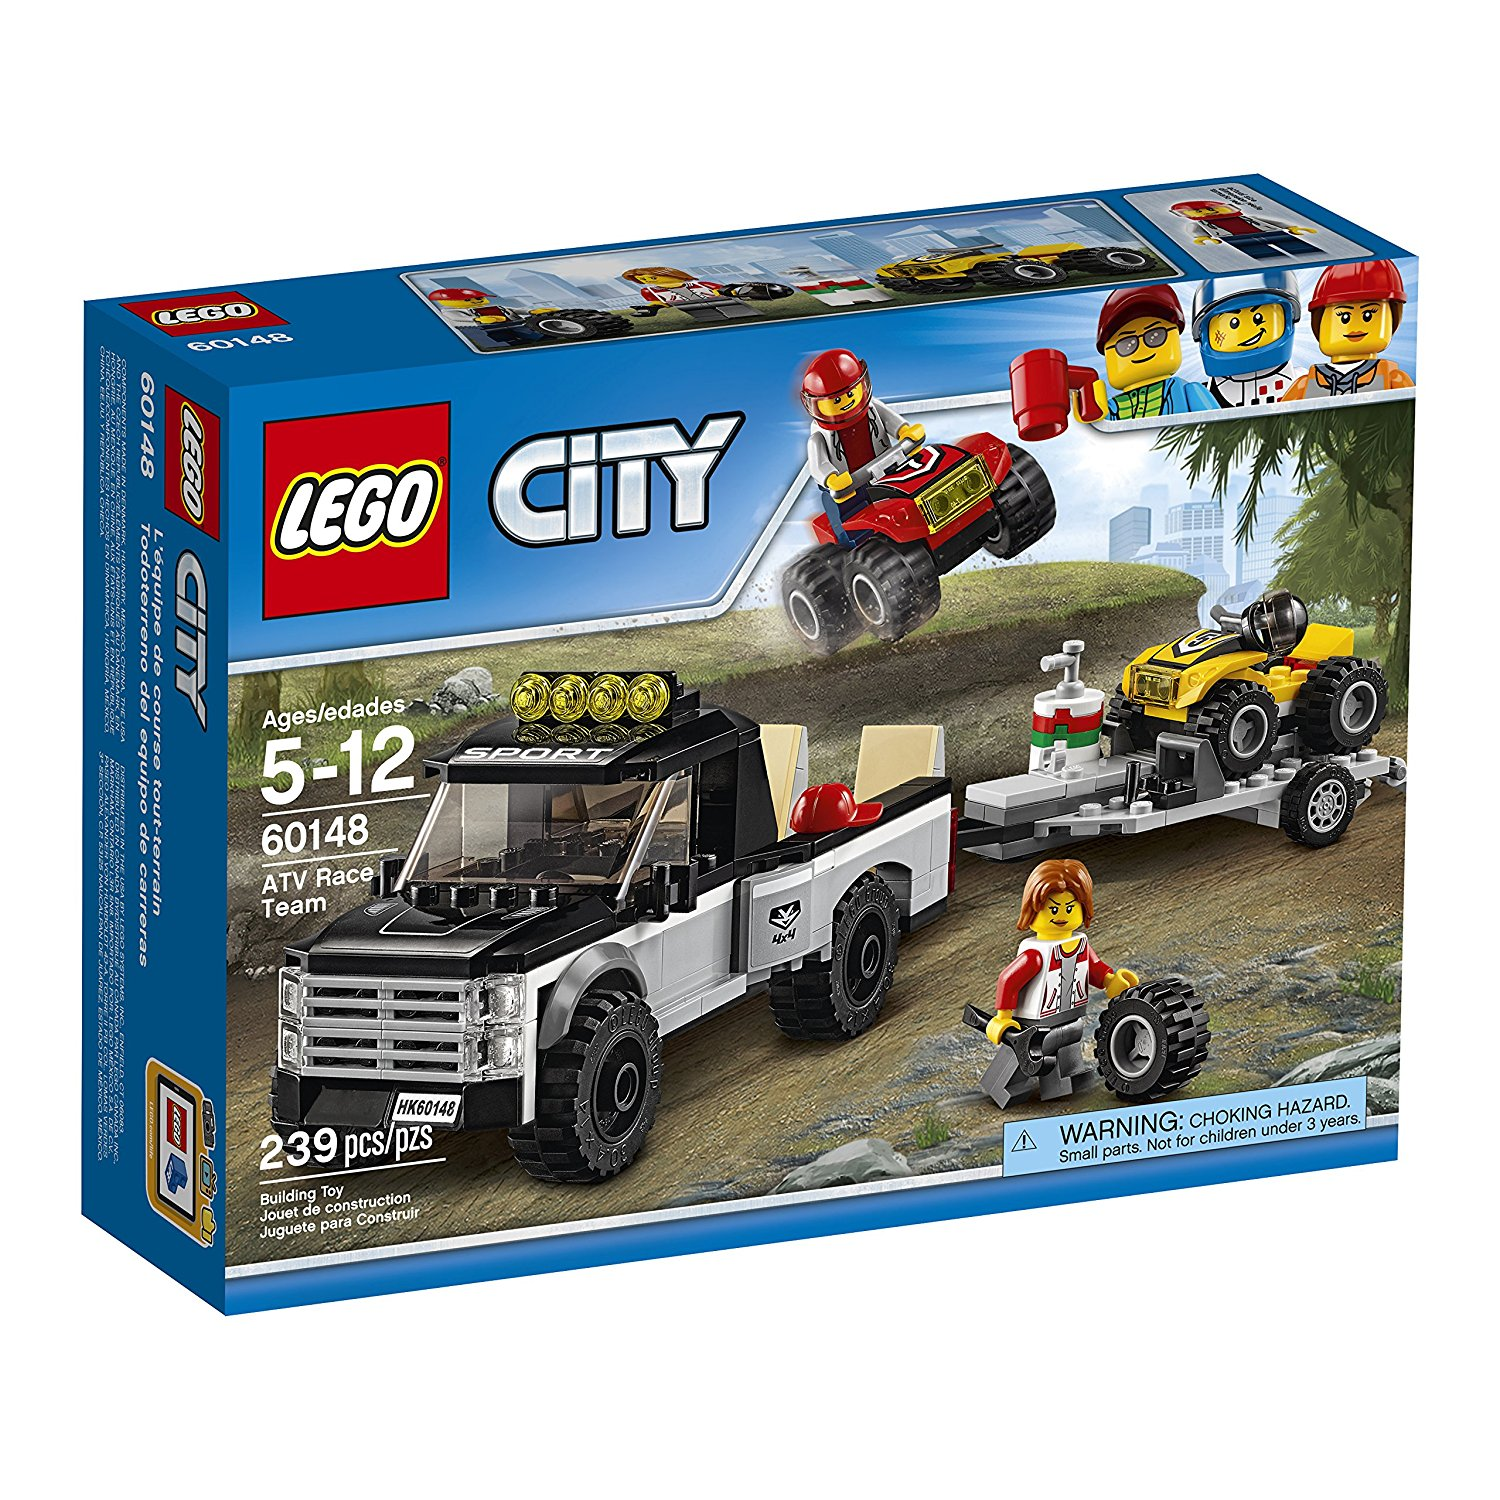 LEGO City ATV Race Team 60148 Best Toy Only $12.79! (Reg $19.99)